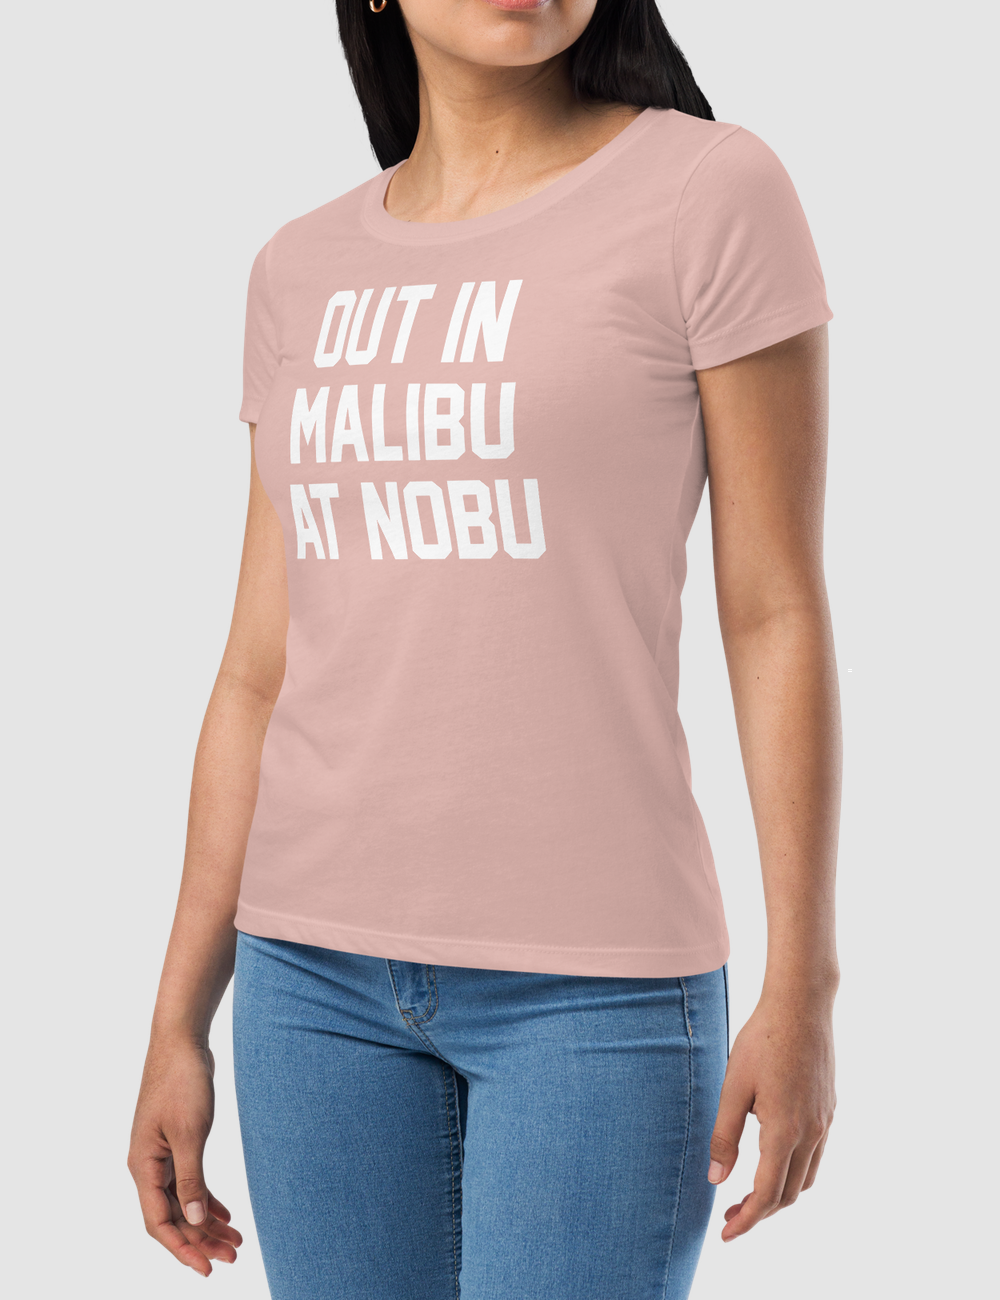 Out In Malibu At Nobu | Women's Fitted T-Shirt OniTakai